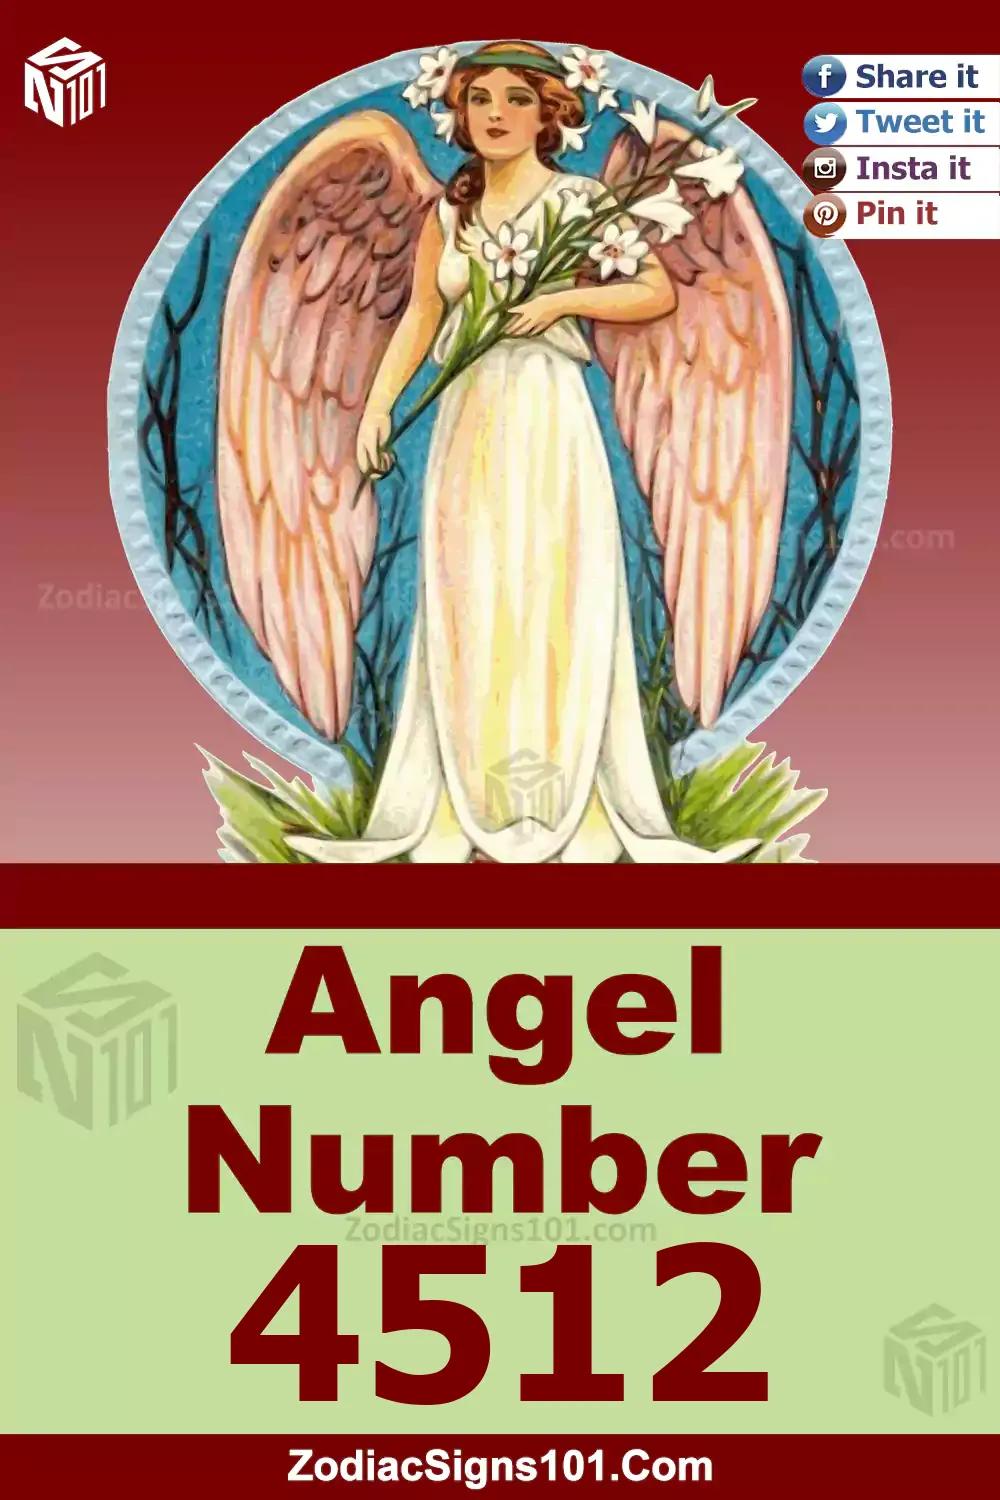 4512-Angel-Number-Meaning.jpg